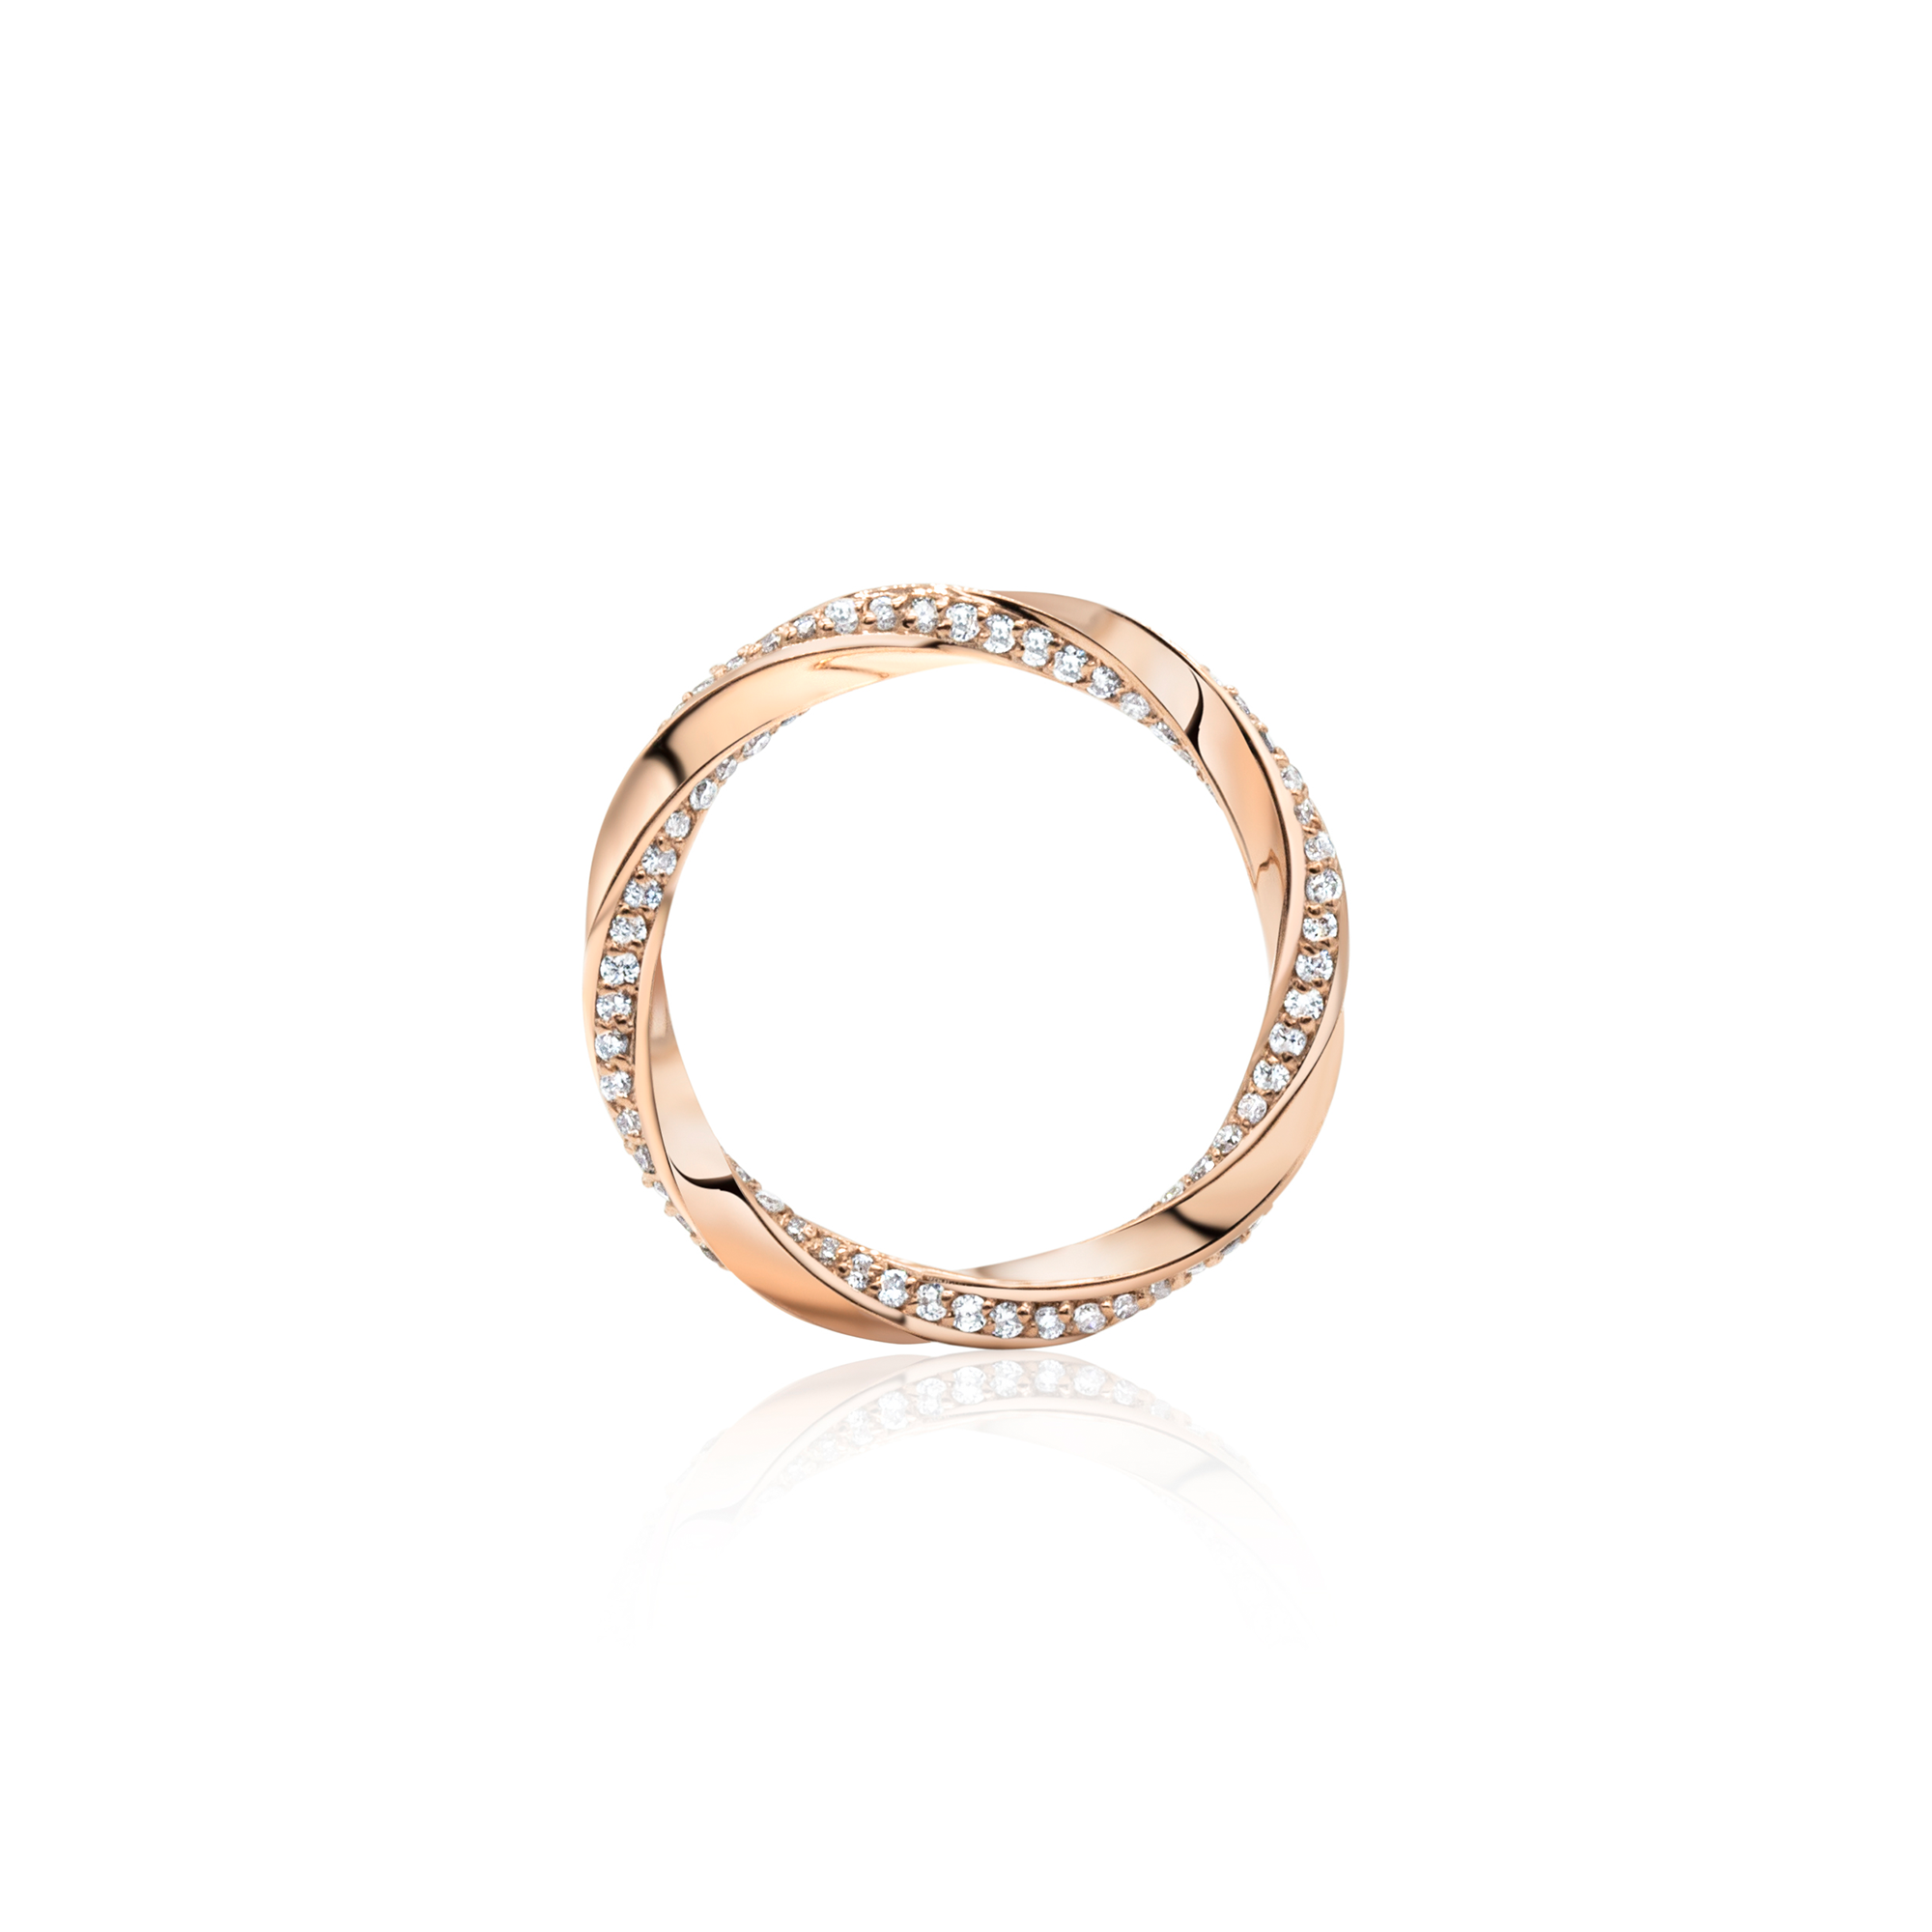 14K rose gold diamond rings eternity ring wedding jewelry